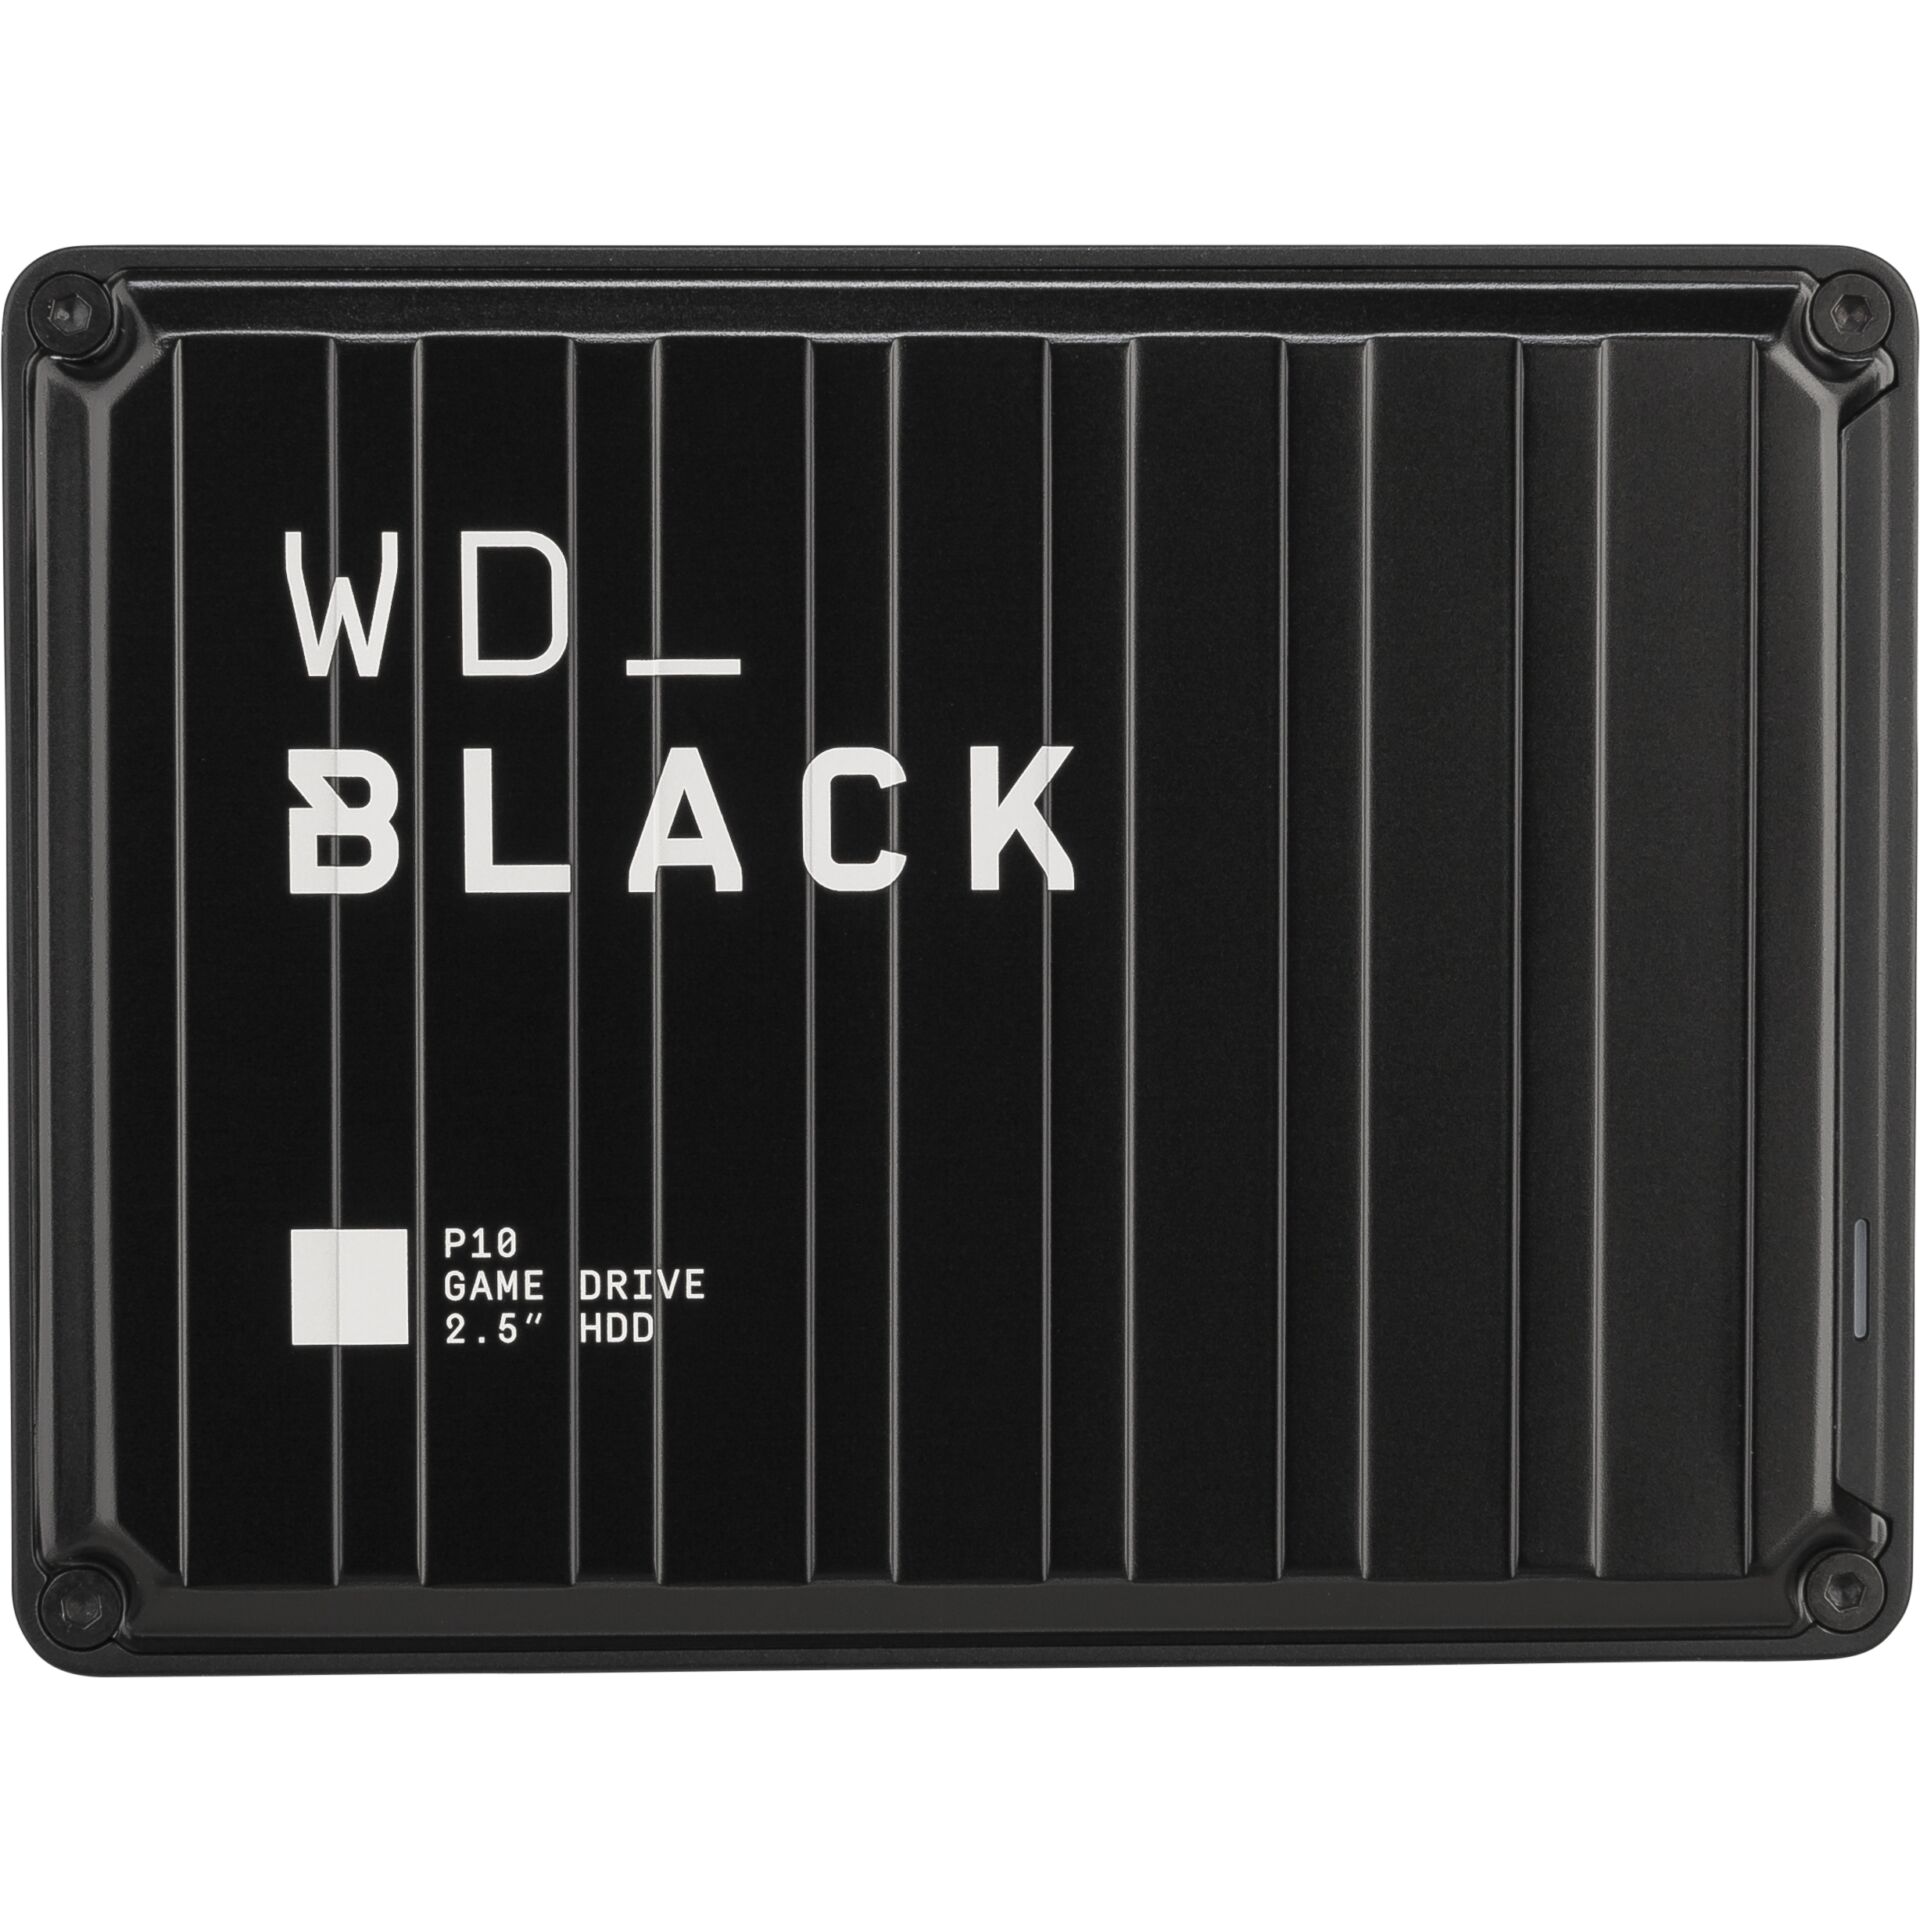 5.0 TB Western Digital WD_Black P10 Game Drive, USB 3.0 Micro-B